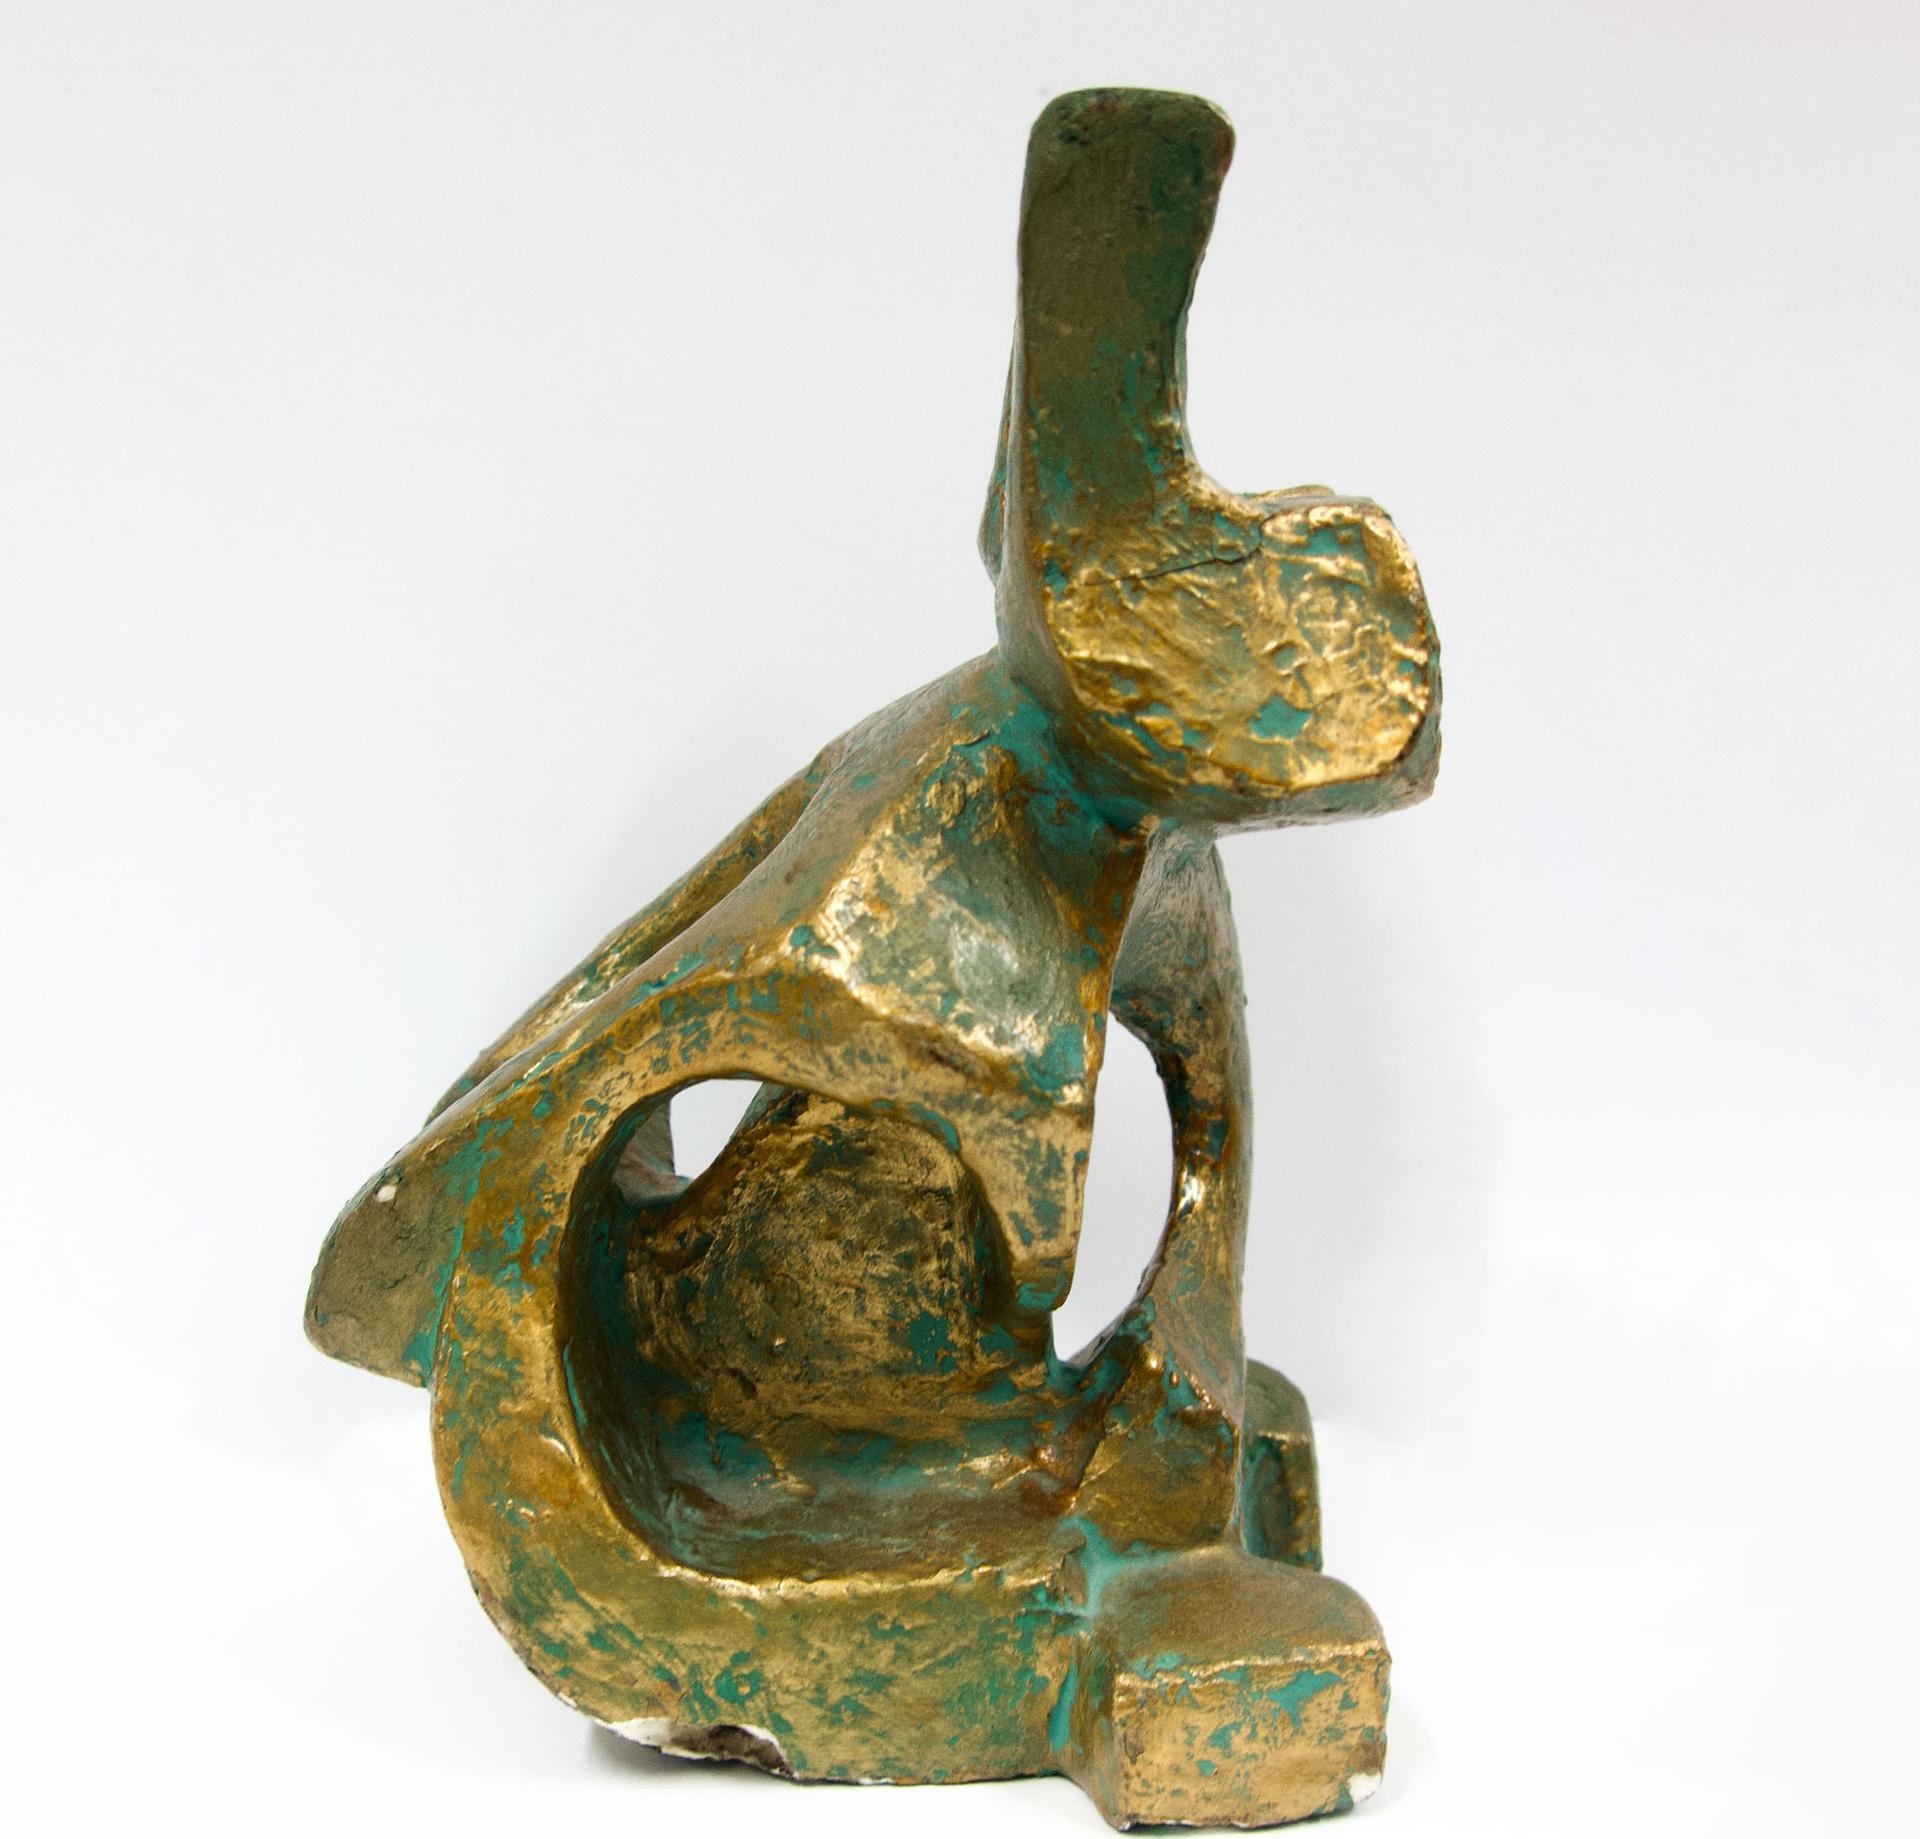 Jack Beder (1910-1987) - Squatting Figure #1 (Sculpture #77), 1969